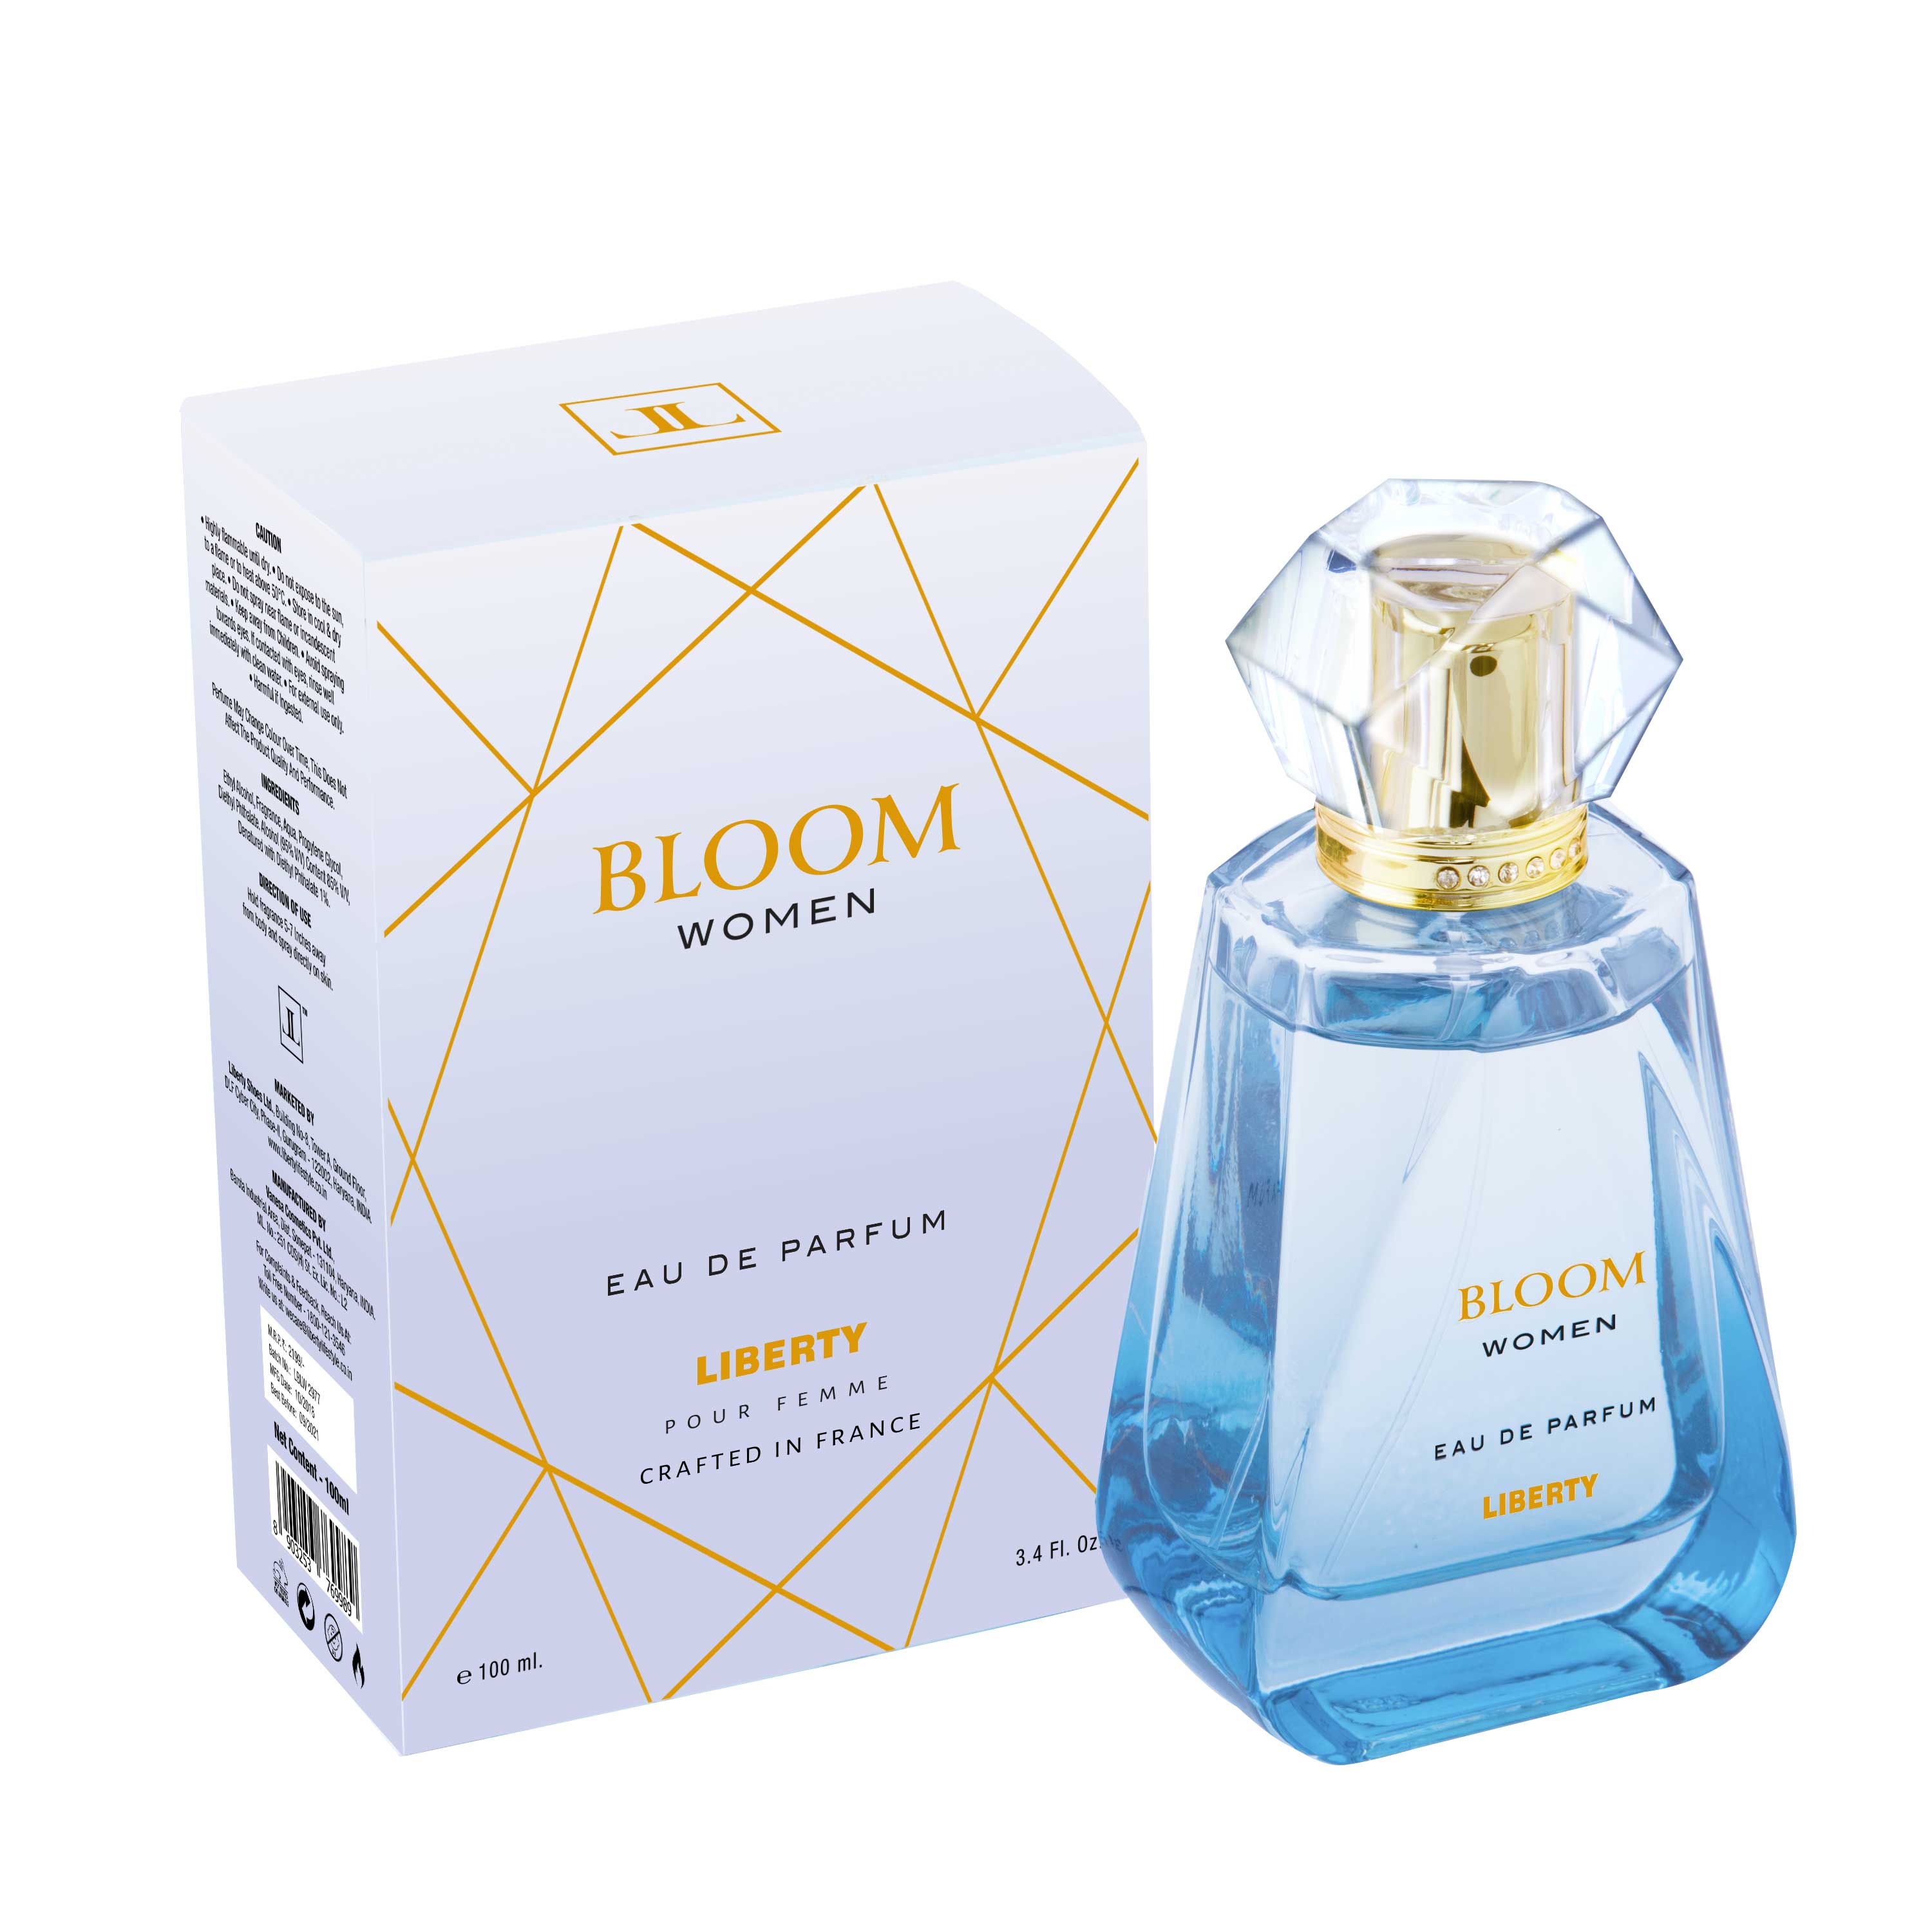 BLOOM WOMEN - Eau De Perfume from LIBERTY LIFESTYLE